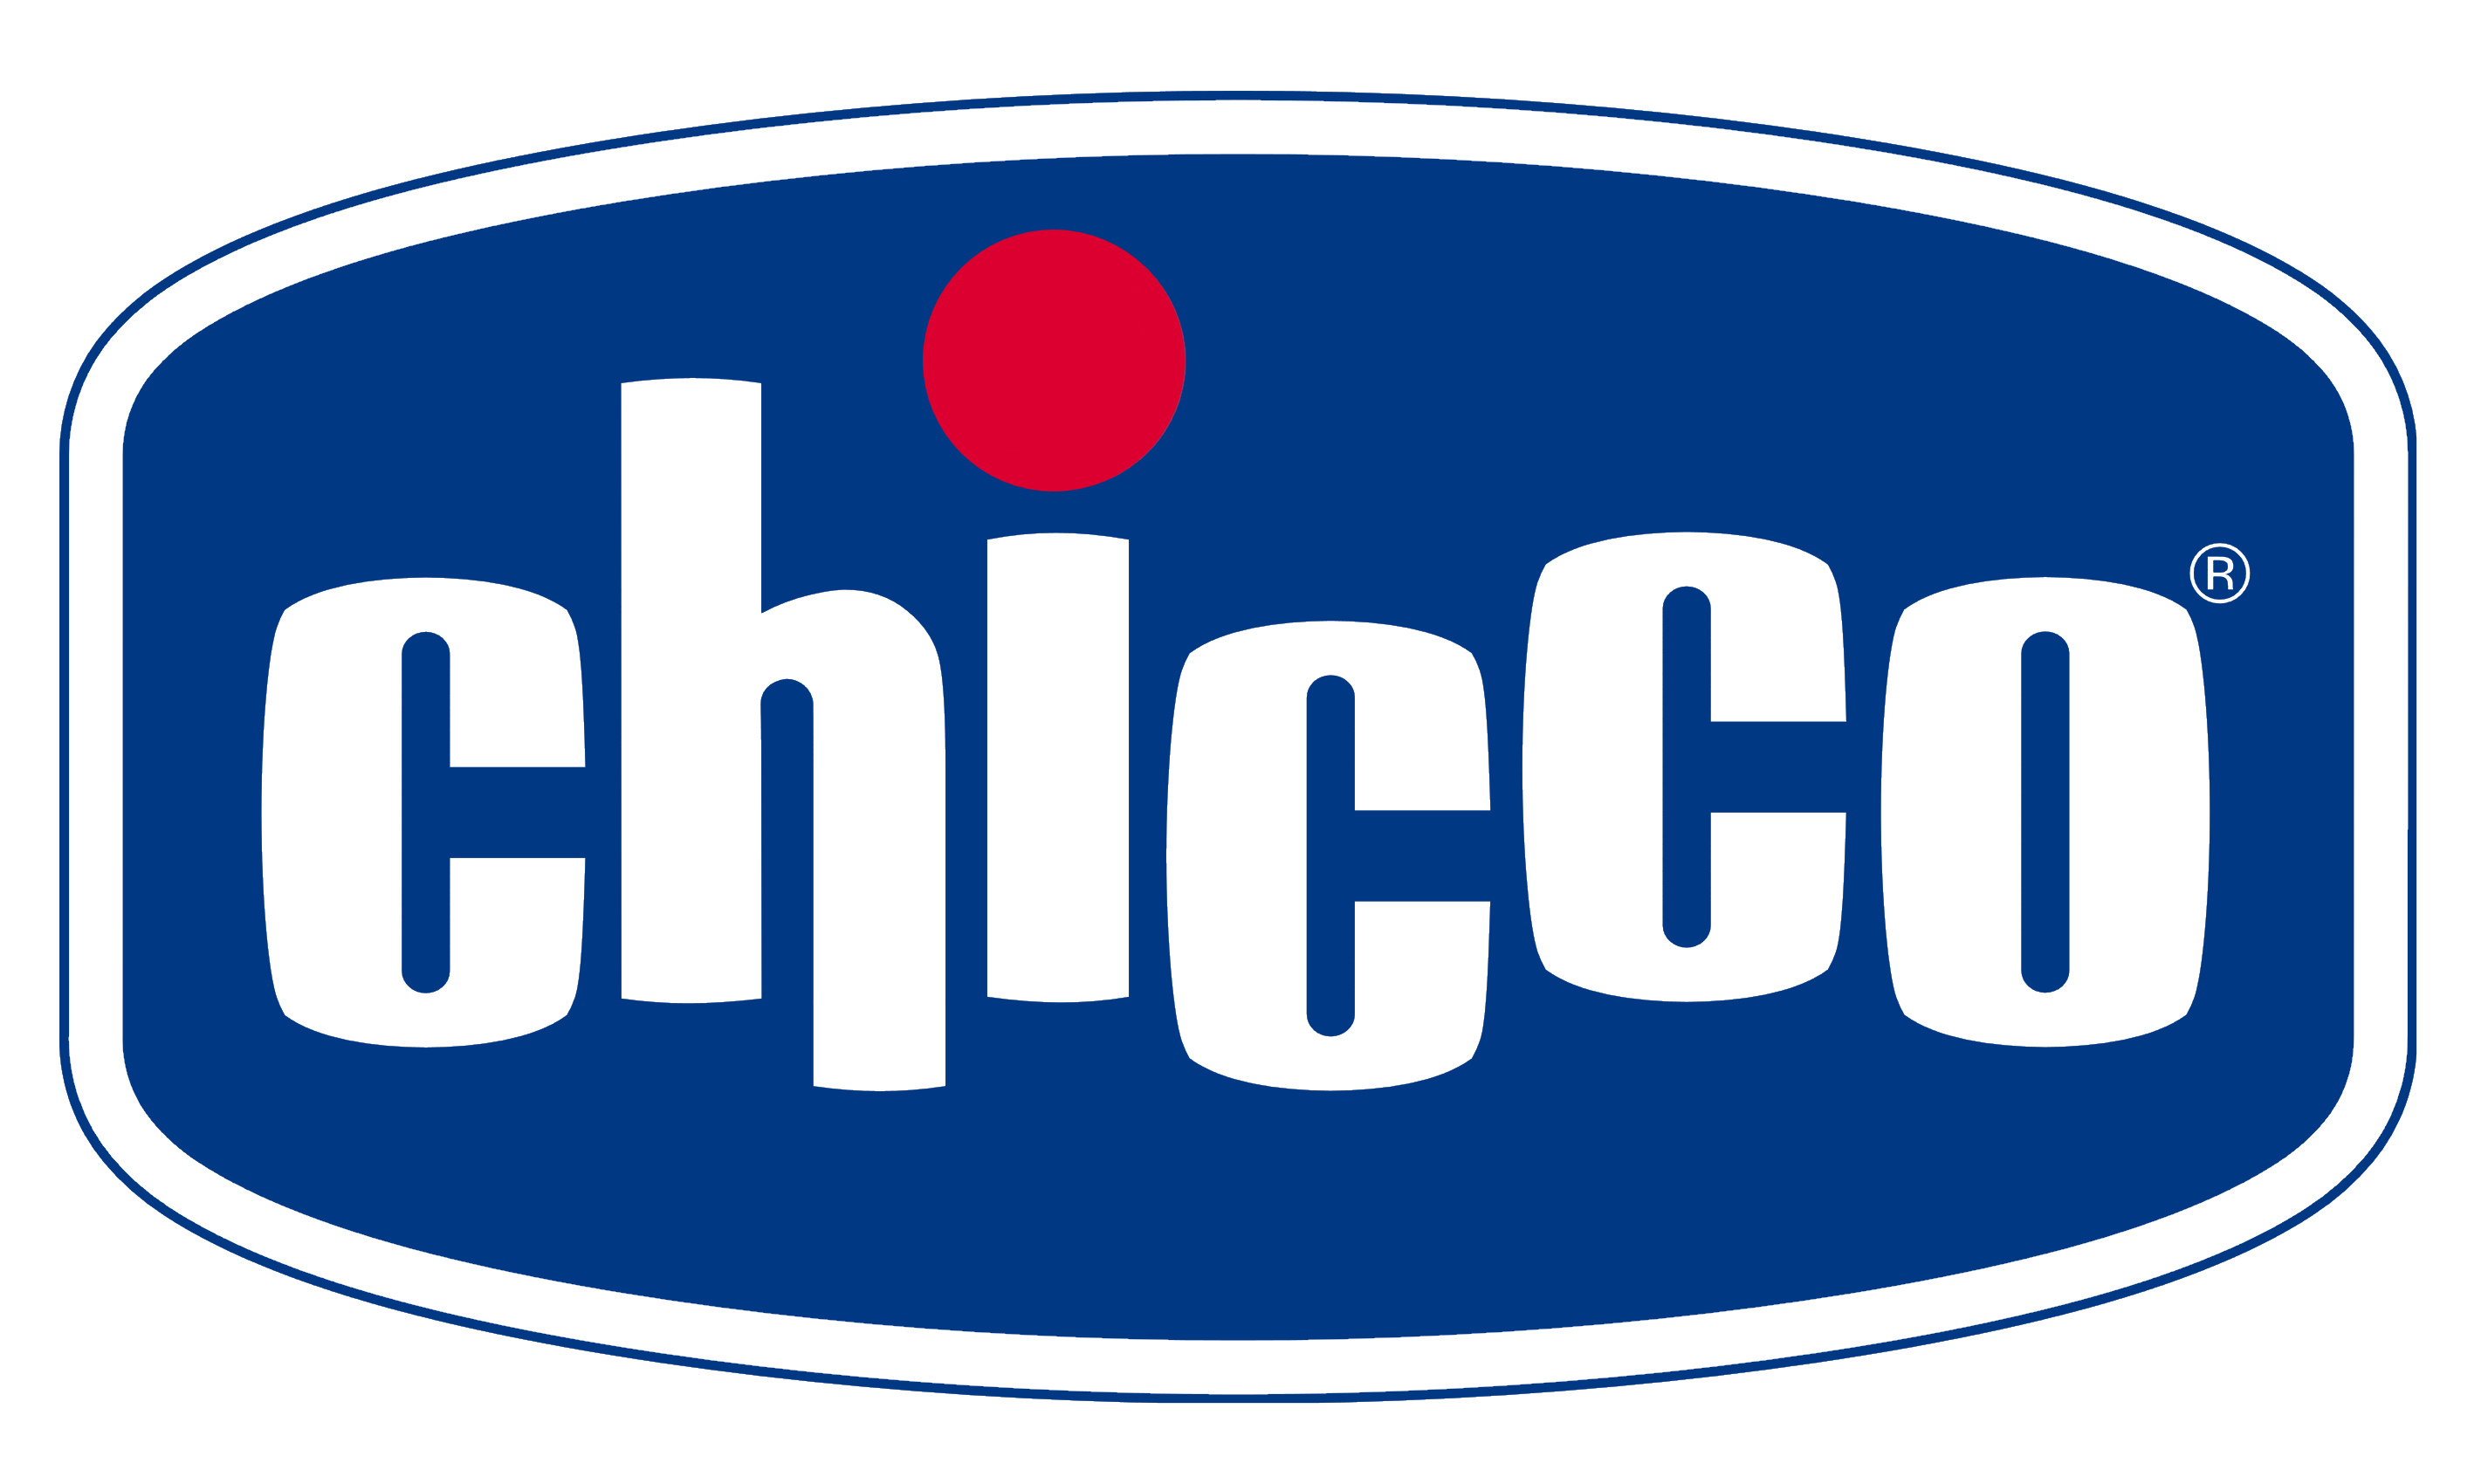 Chicco logo, logotype